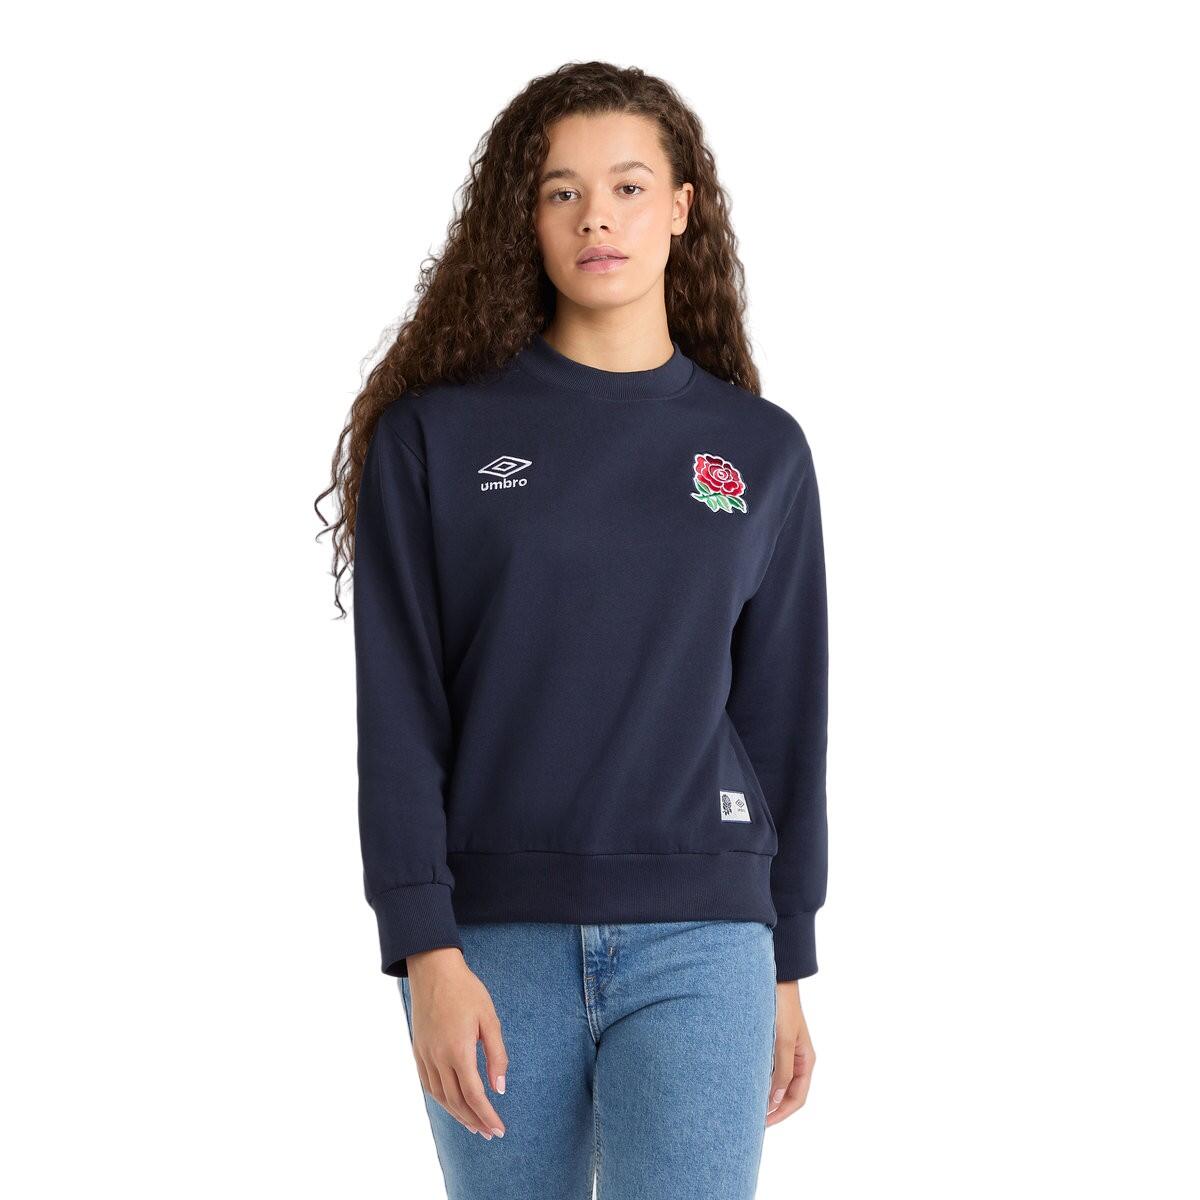 UMBRO Womens/Ladies Dynasty England Rugby Sweatshirt (Navy Blazer)